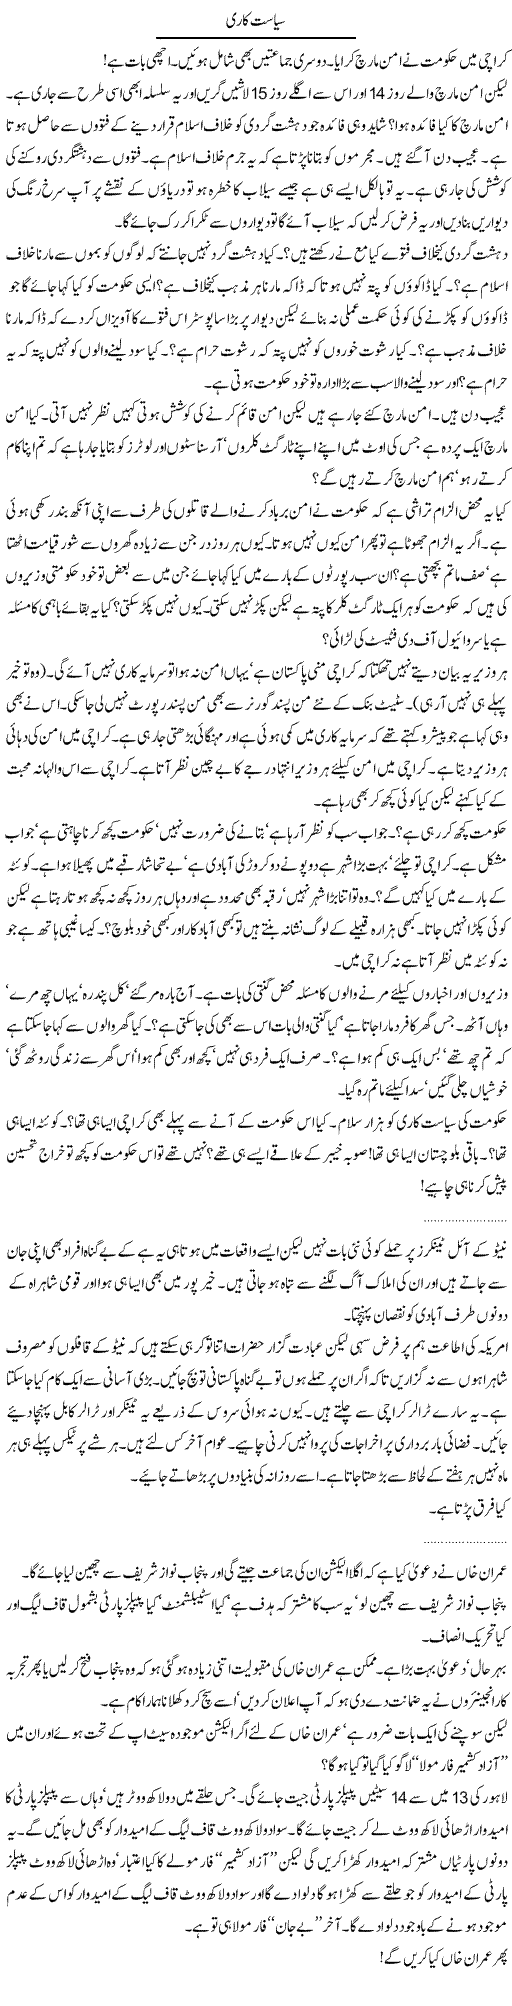 Karachi and Imran Khan Express Column Abdullah Tariq 2 August 2011